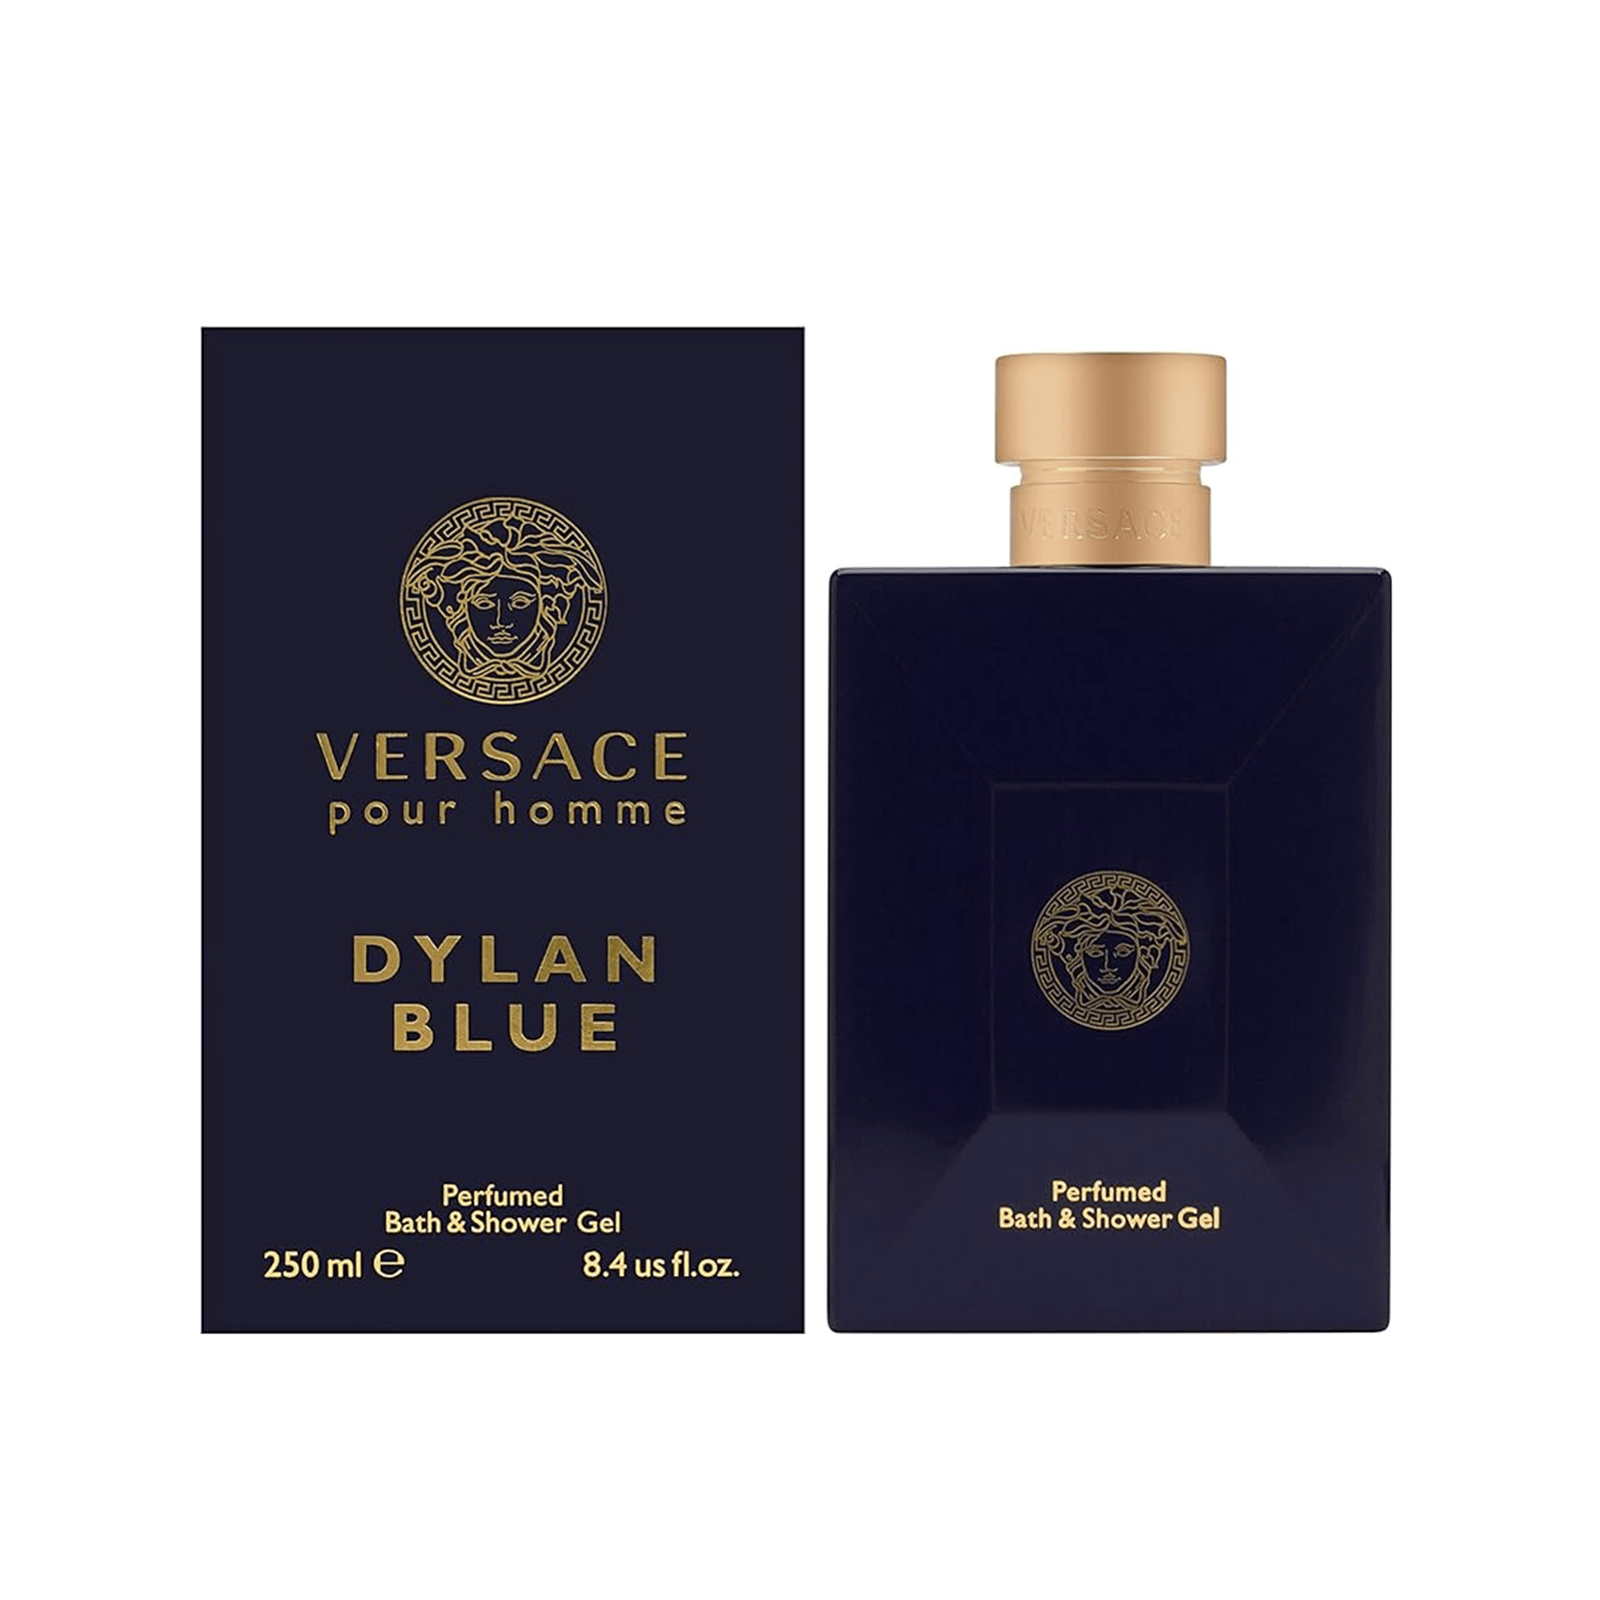 Versace Pour Homme Dylan Blue Perfumed Bath & Shower Gel 250ml (8.4 fl oz)